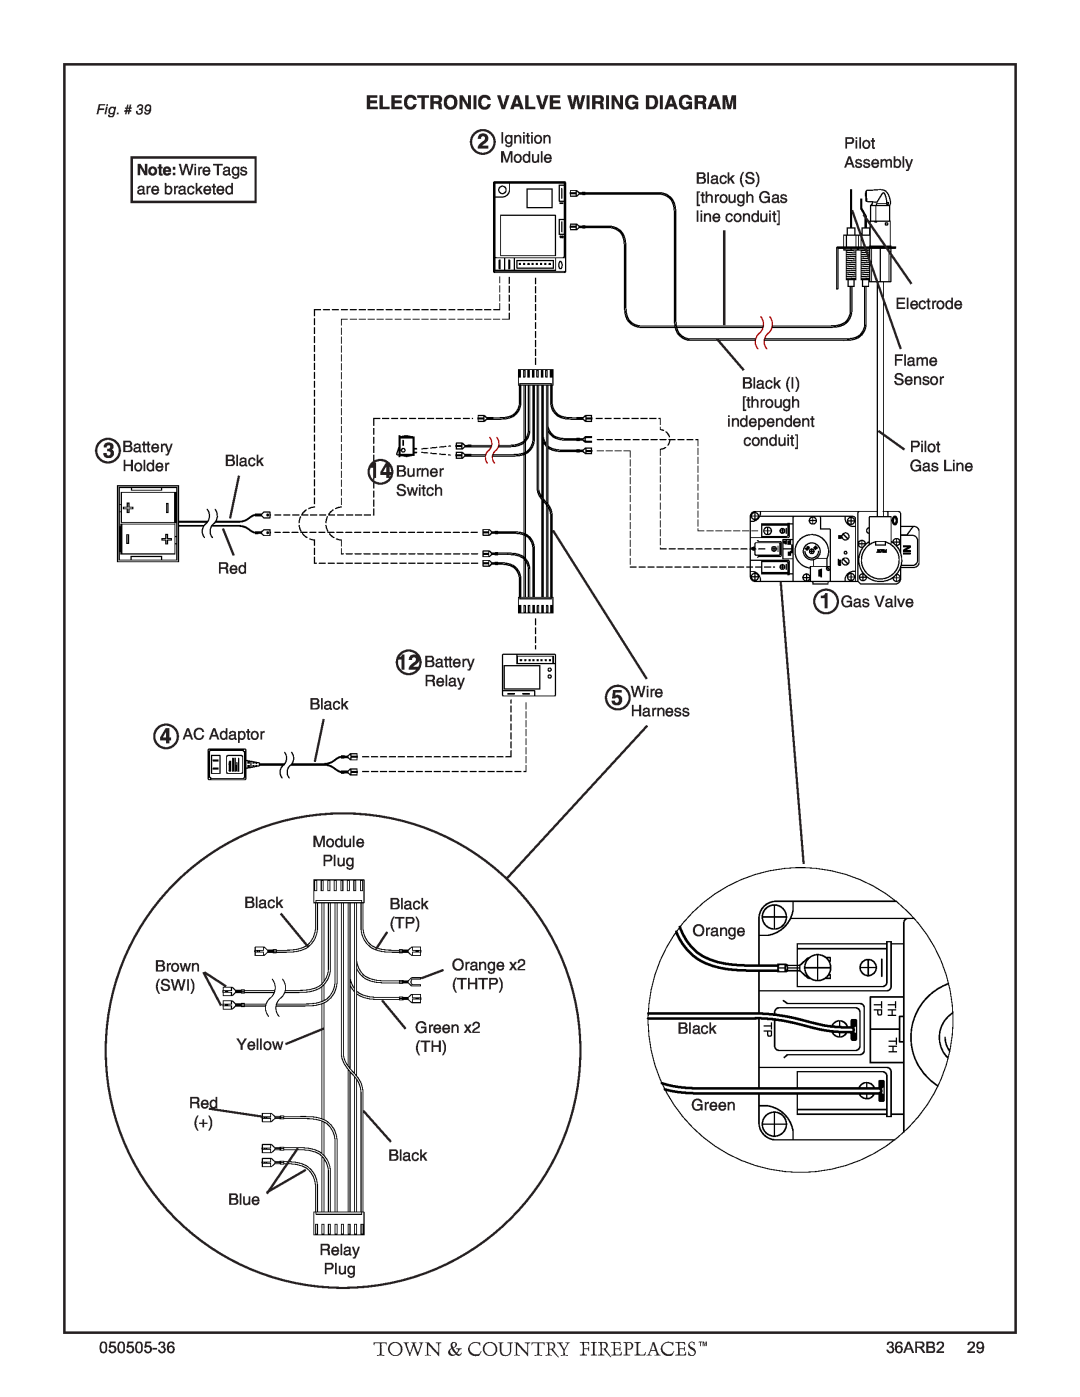 PGS TC36 AR manual Electronic Valve Wiring Diagram 